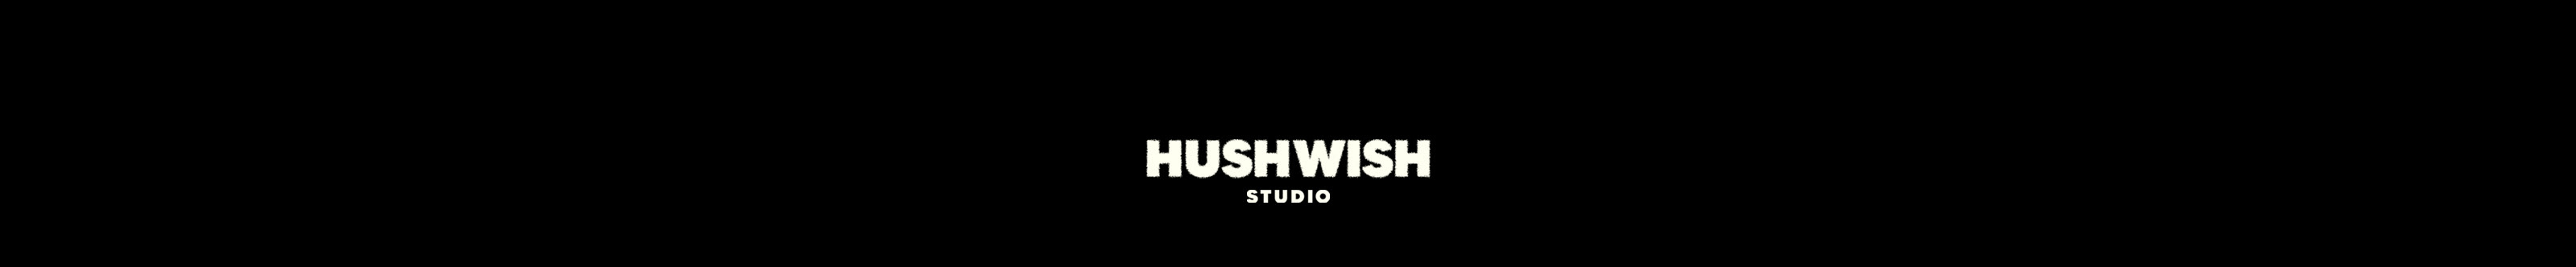 Baner profilu użytkownika HUSHWISH 허쉬위쉬